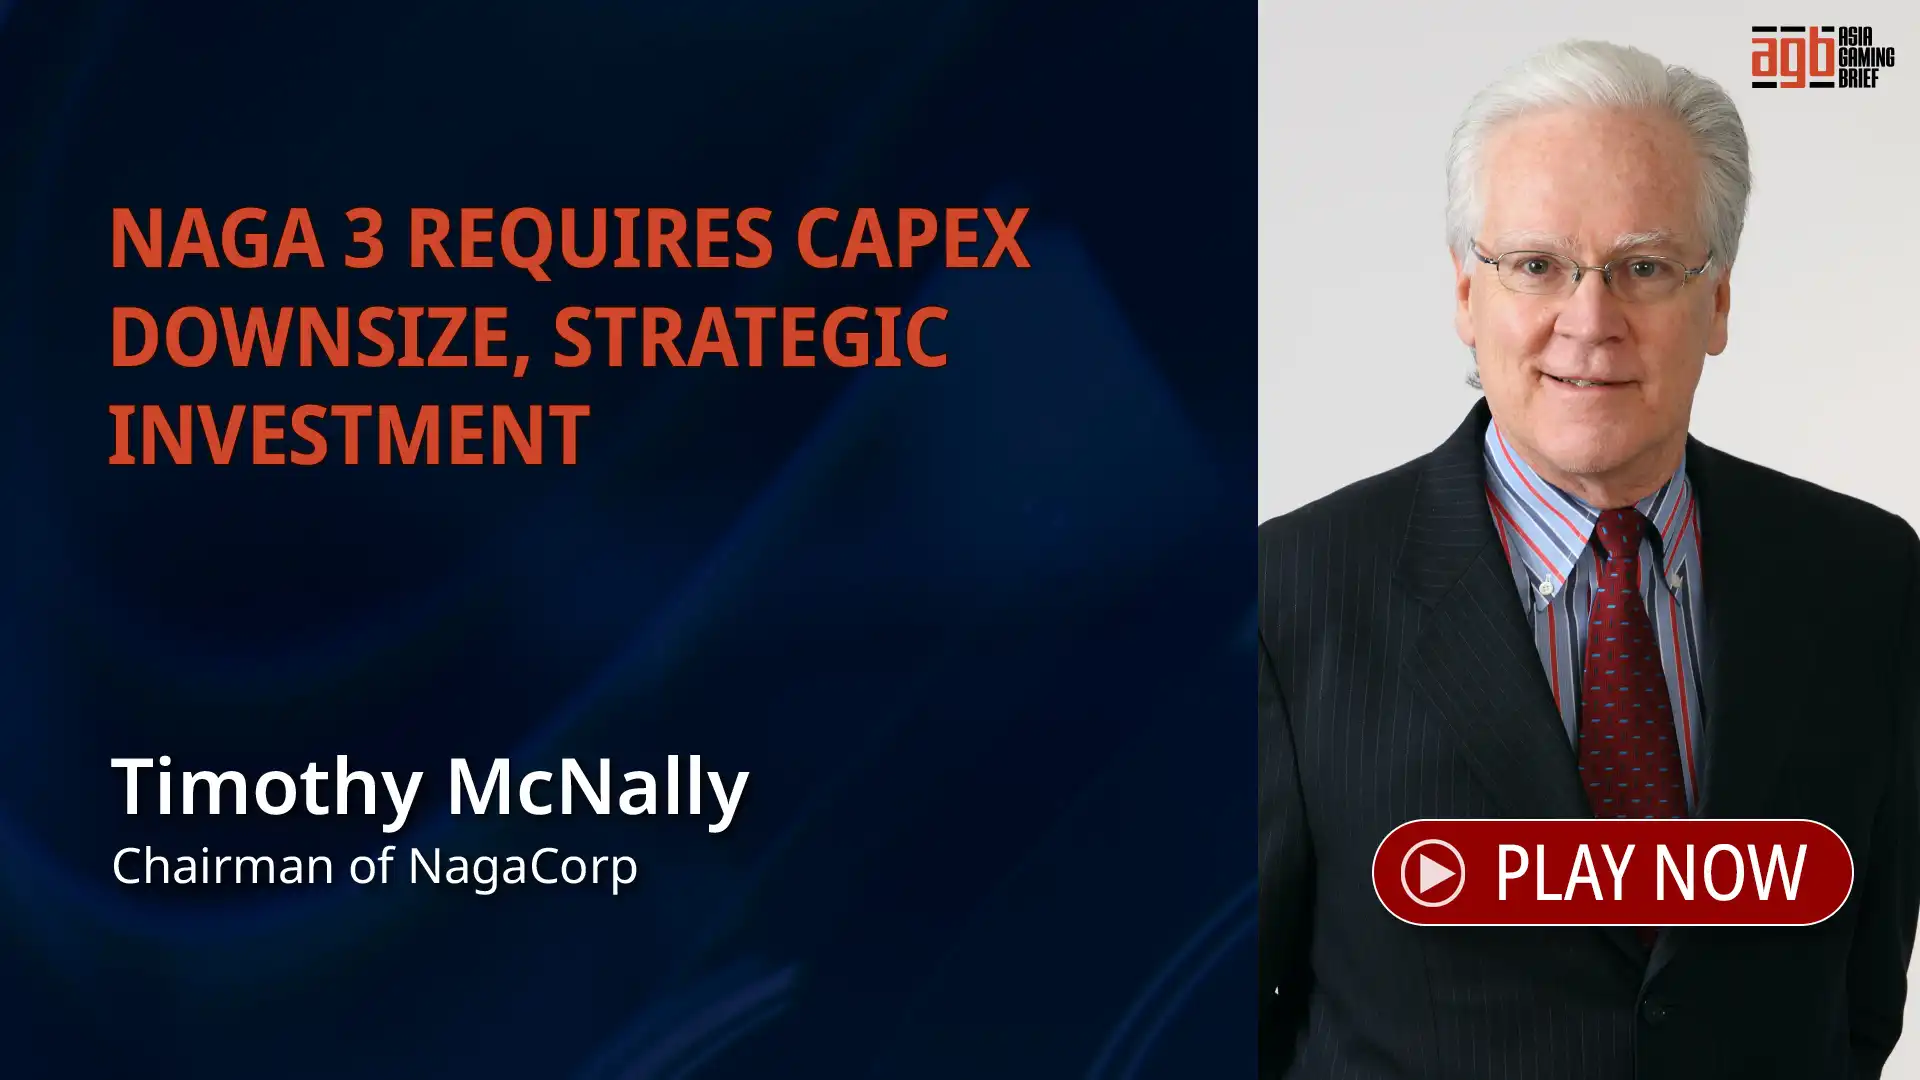 Naga 3 requires Capex downsize, strategic investment, Timothy McNally, NagaCorp
